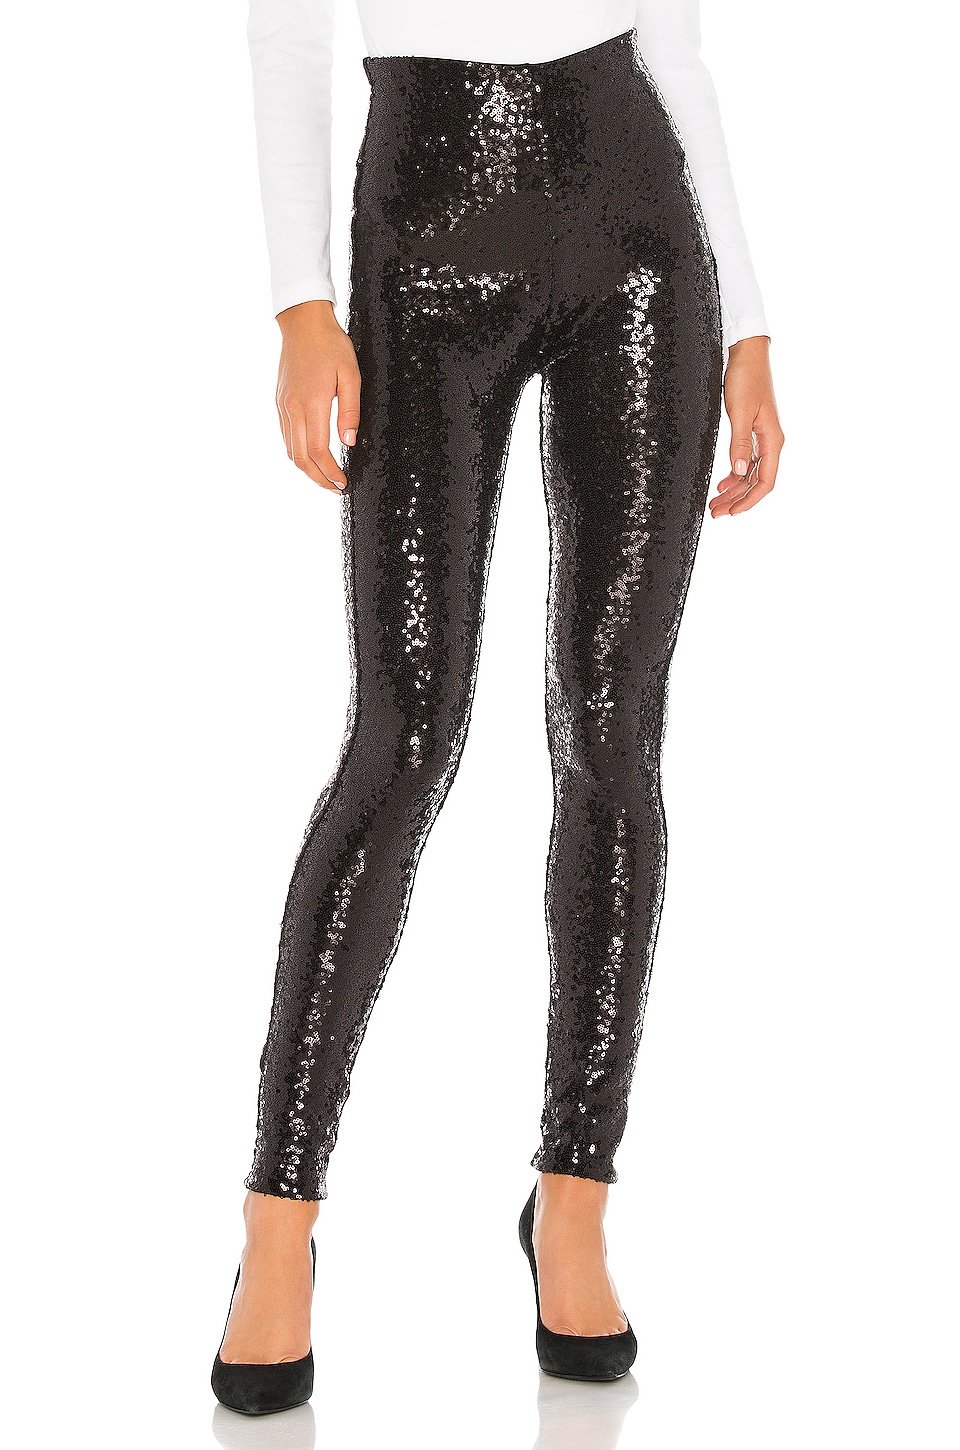 Black Sequin Leggings – Trendy, Comfortable and Durable